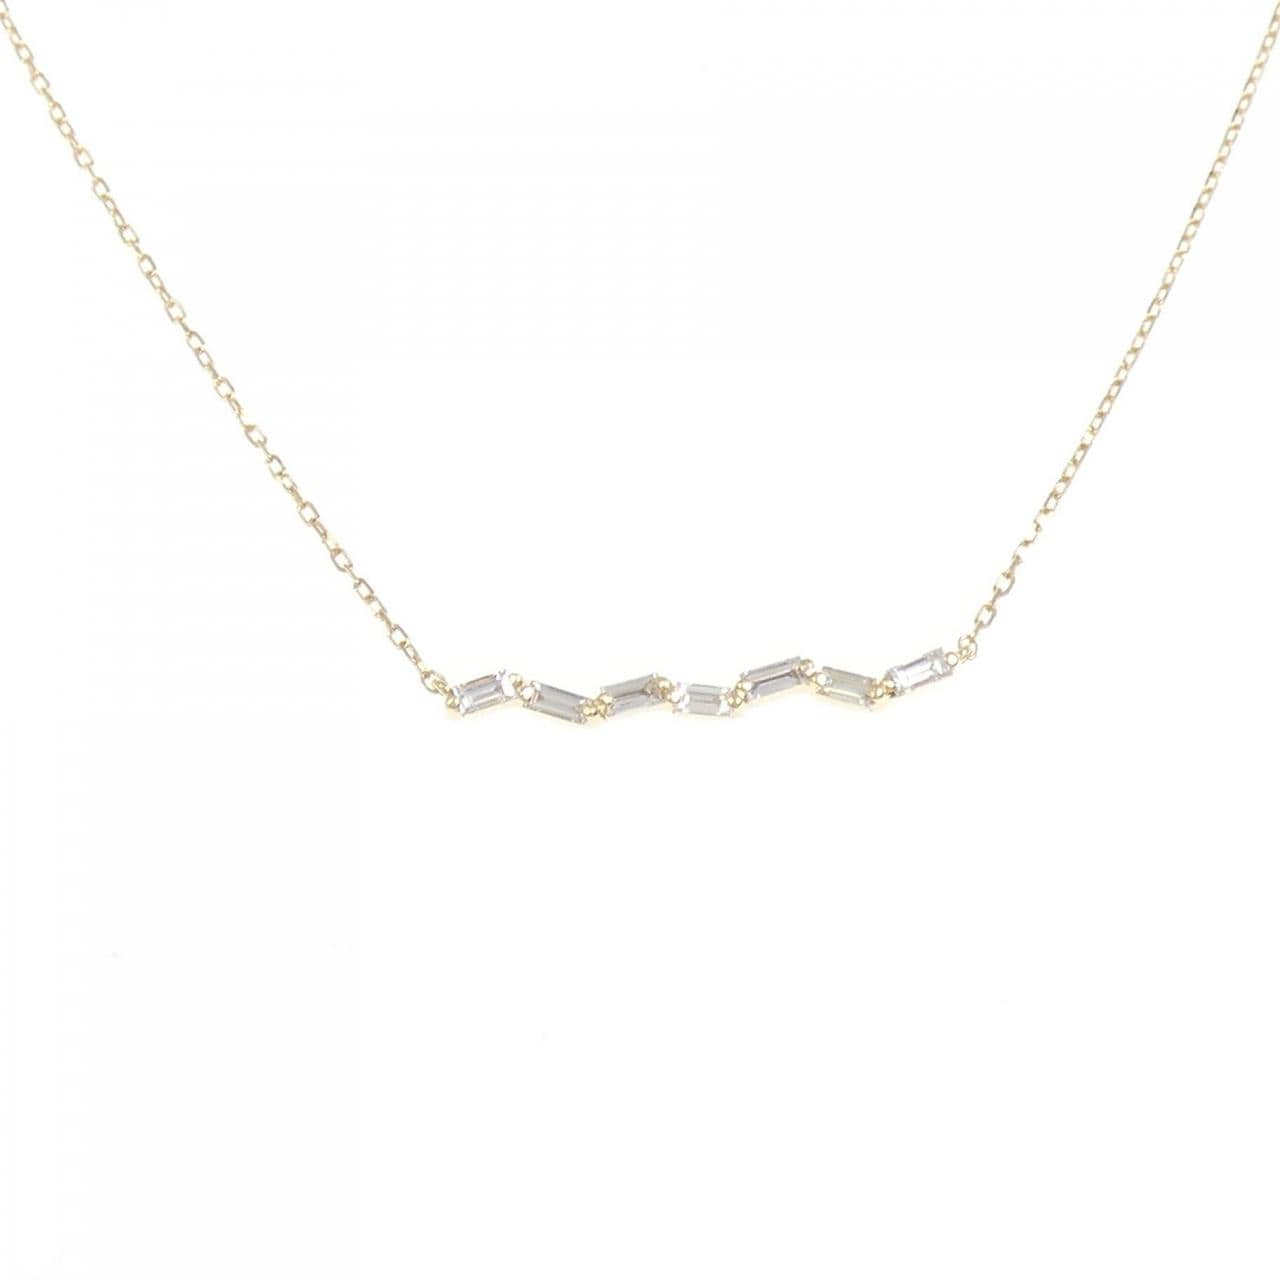 COCOSHNIK Diamond necklace